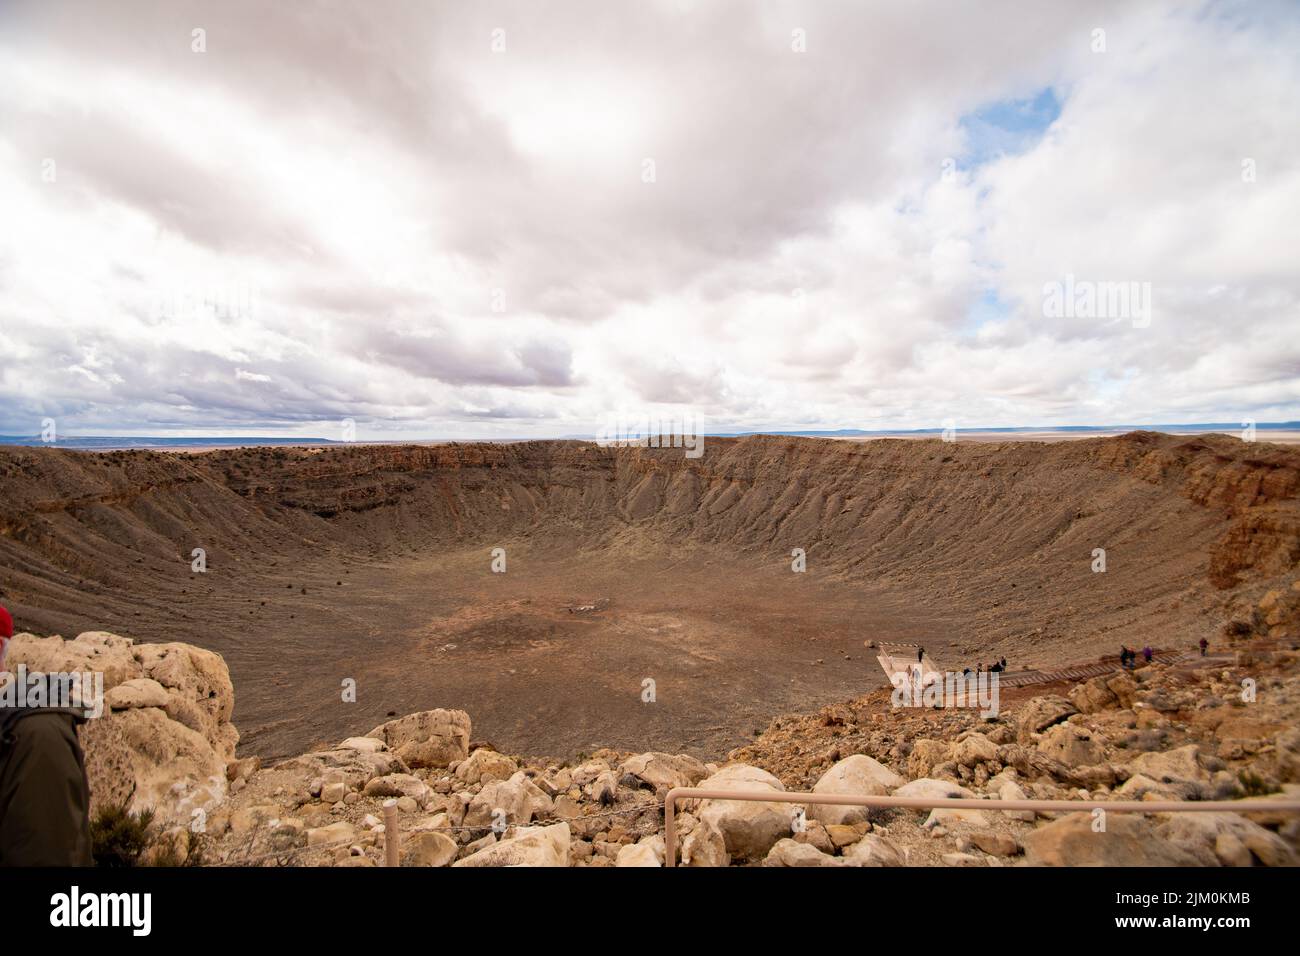 The view of Meteor Crater Natural Landmark. Arizona, United States. Stock Photo